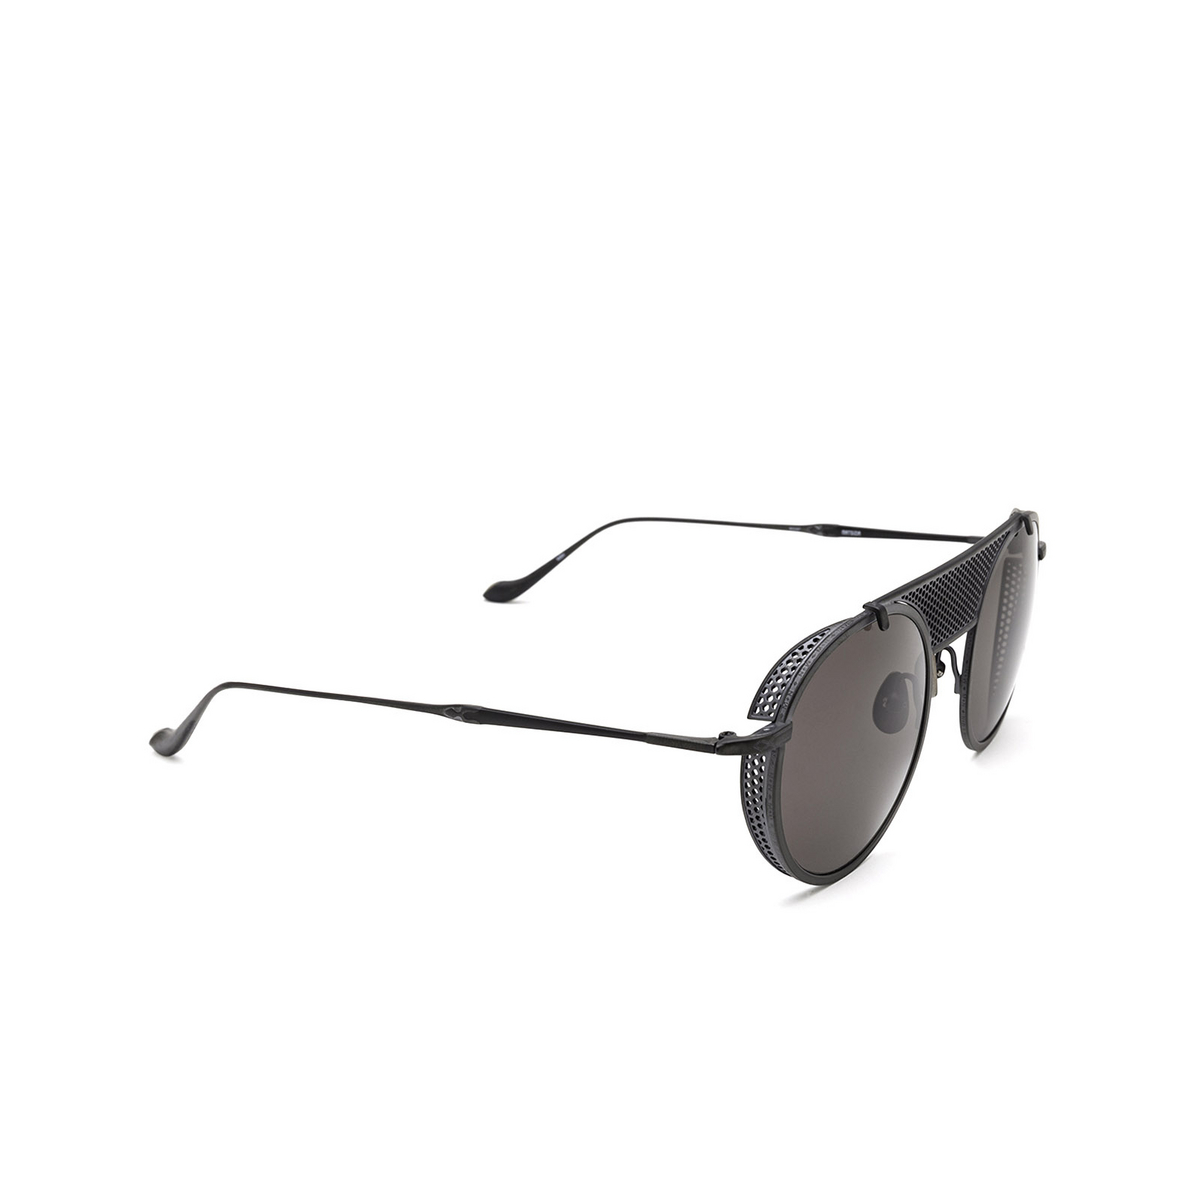 Matsuda® Round Sunglasses: M3097 color Matte Black Mbk - three-quarters view.